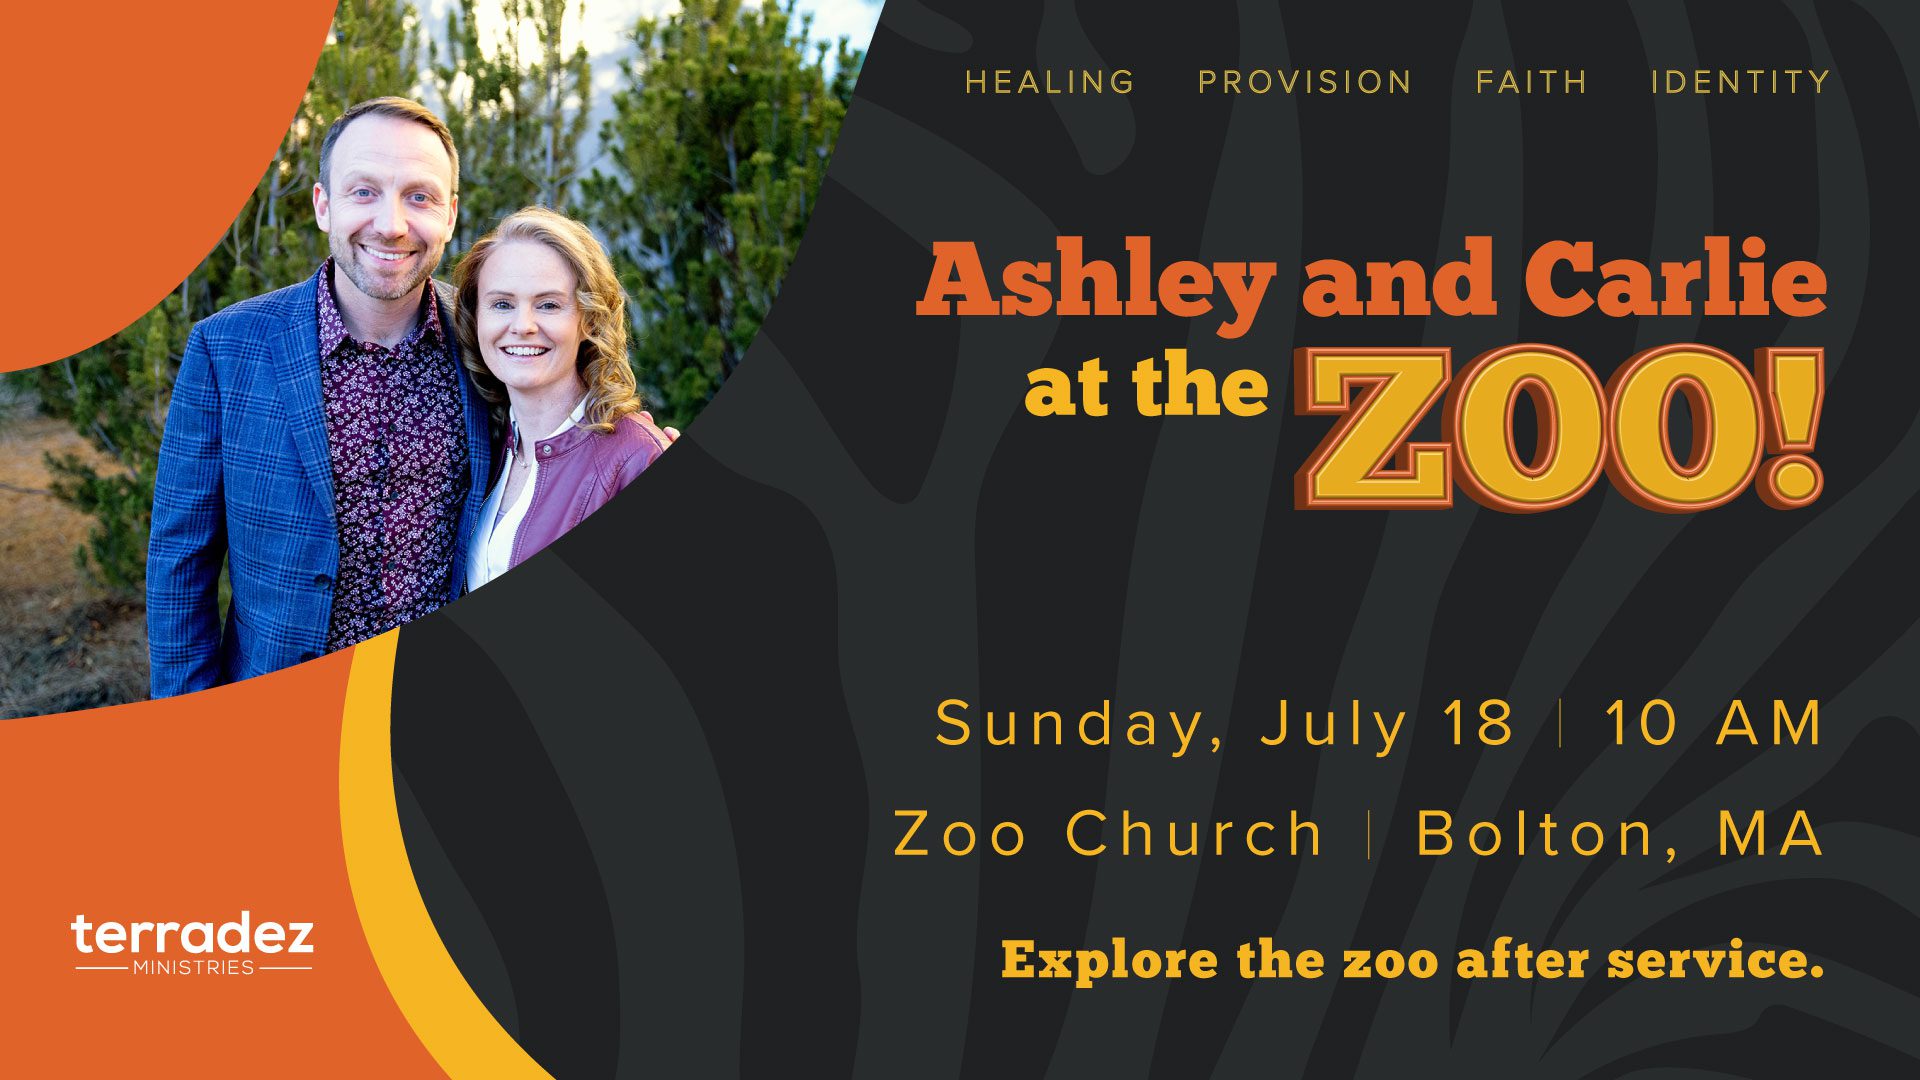 Ashley and Carlie Terradez at Zoo Church, Bolton MA, on July 18, 2021.